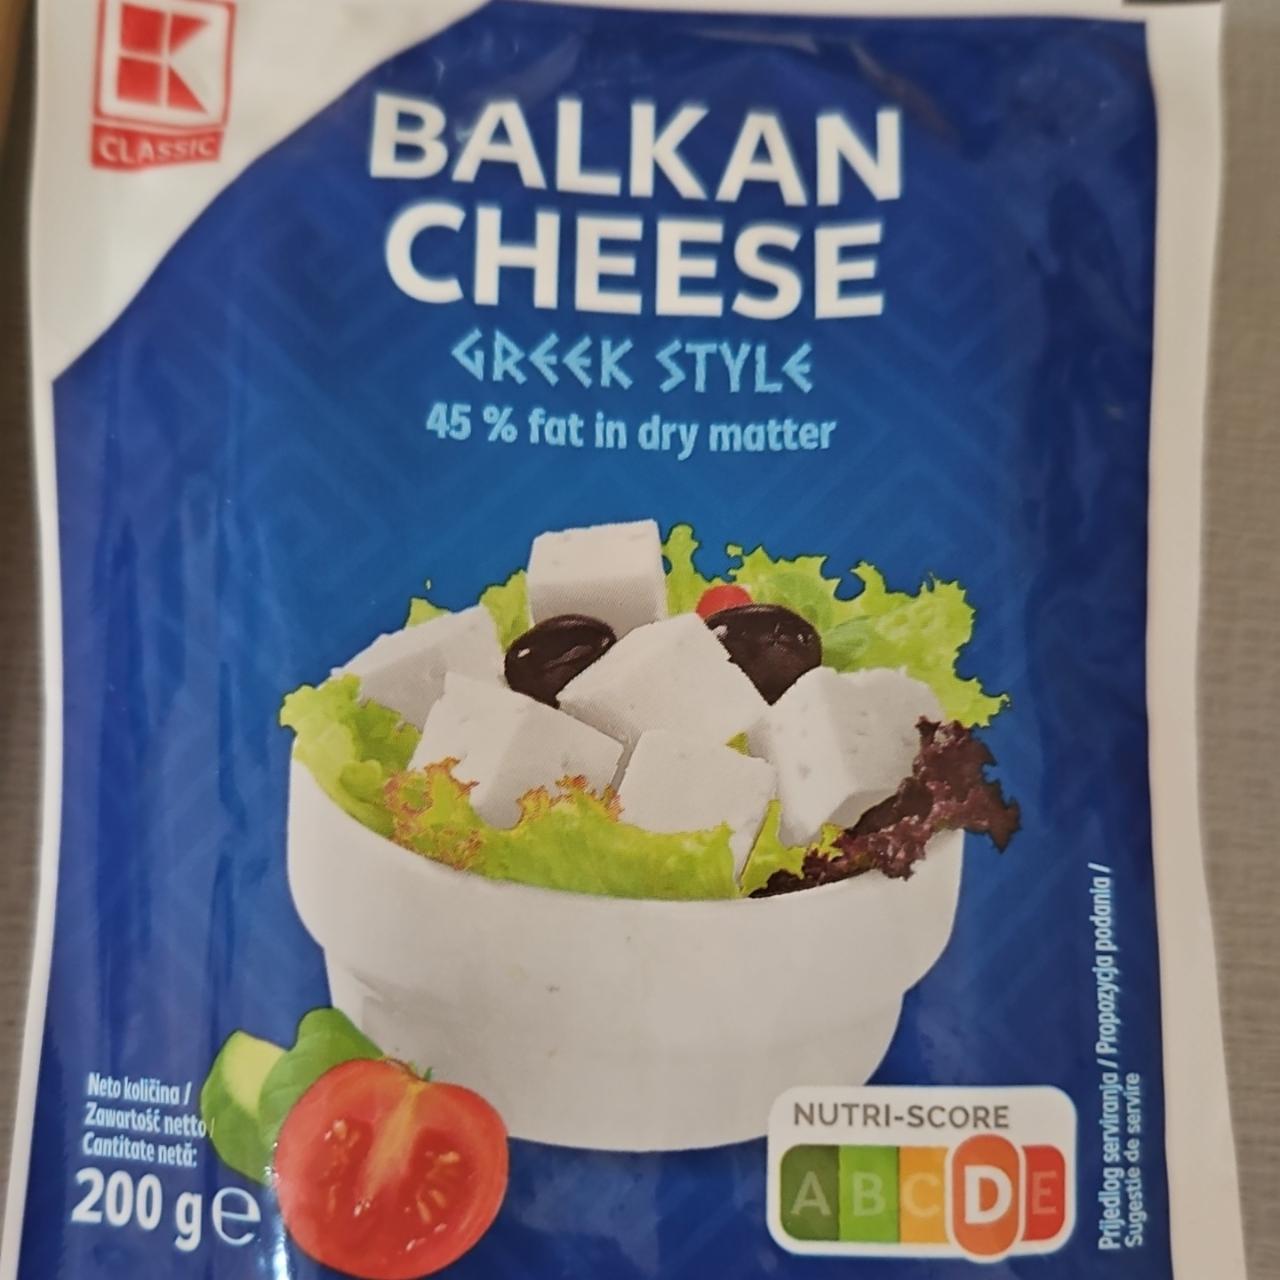 Fotografie - Balkan cheese Greek style K-Classic